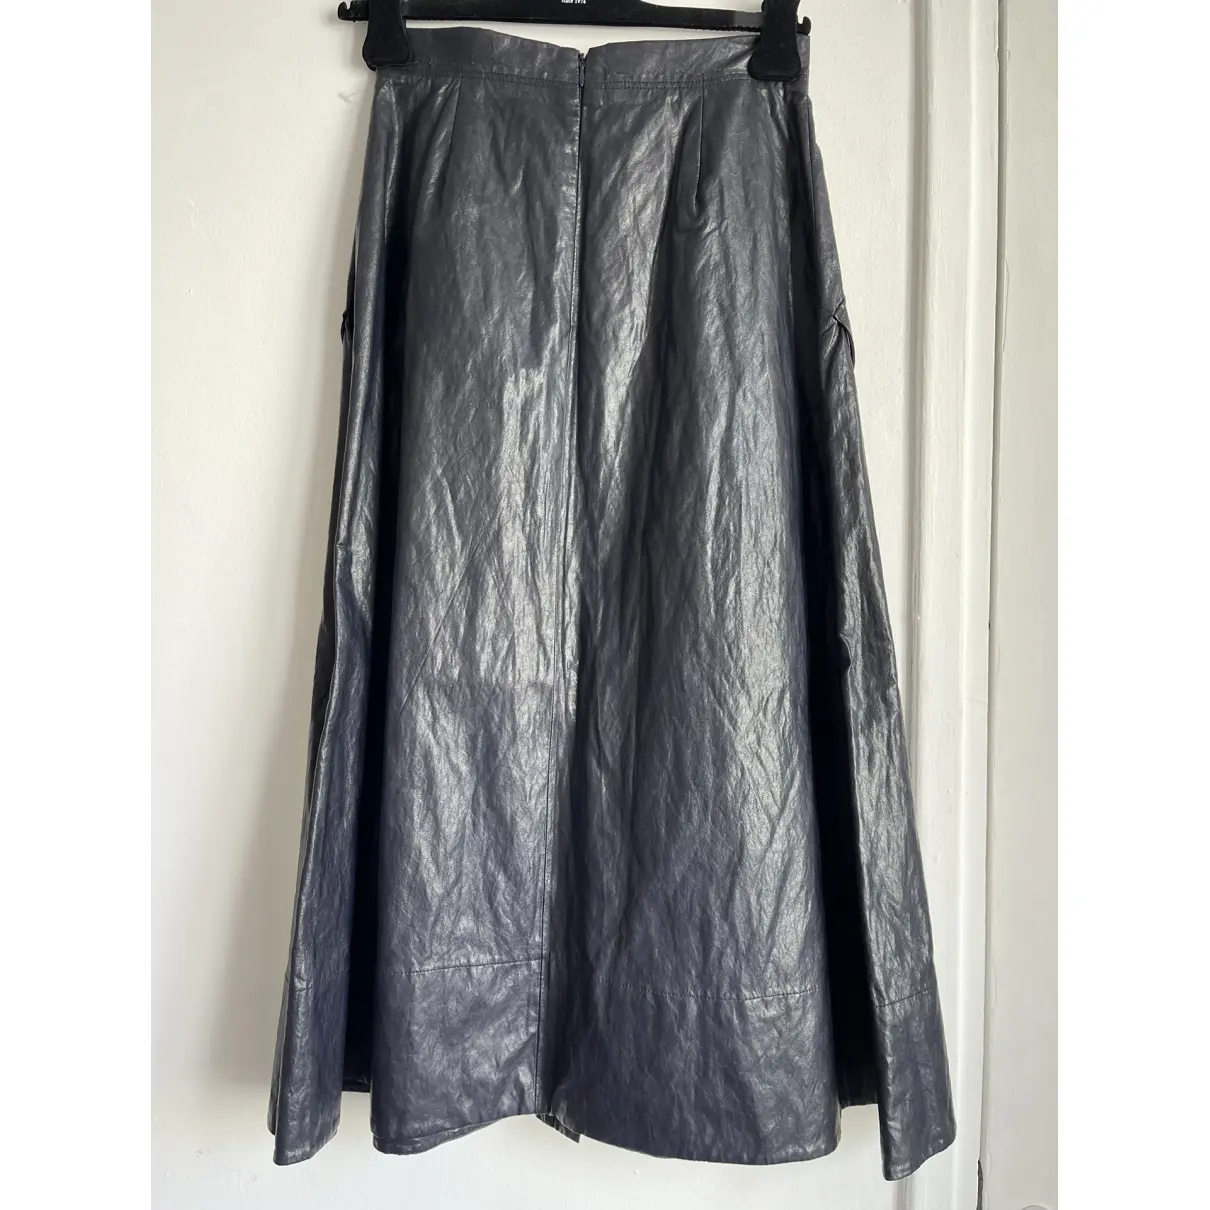 Buy Rejina Pyo Vegan leather maxi skirt online